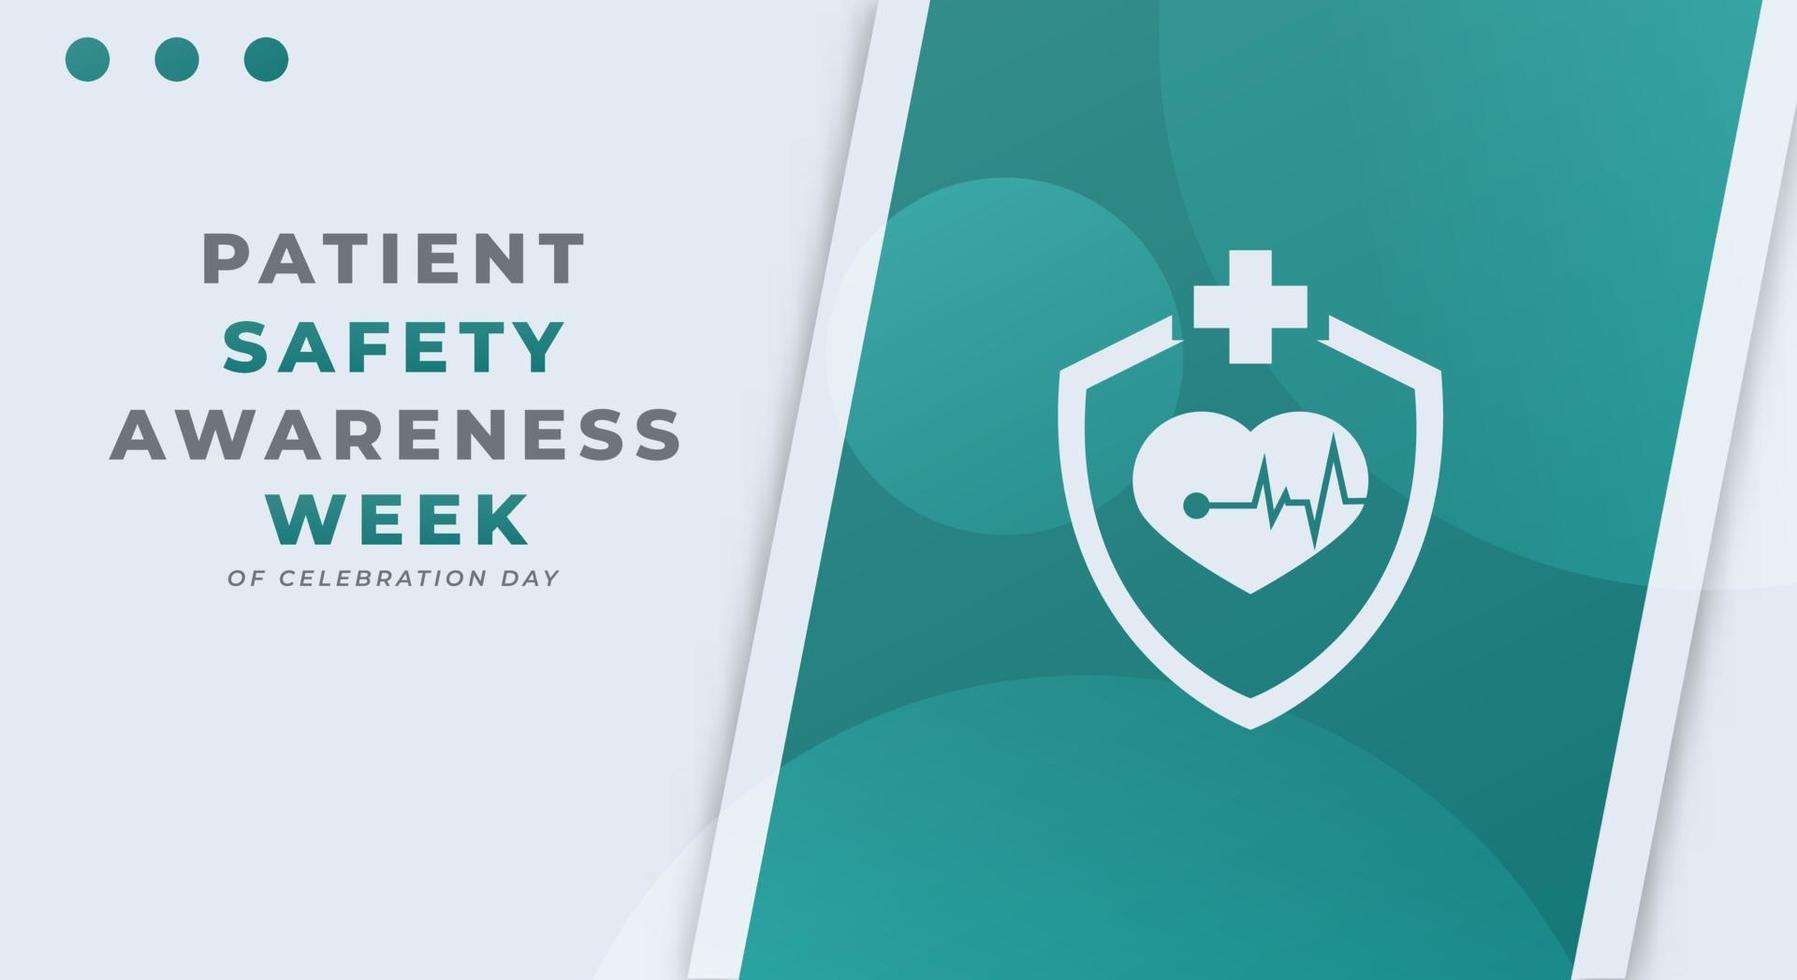 Happy Patient Safety Awareness Week Celebration Vector Design Illustration for Background, Poster, Banner, Advertising, Greeting Card